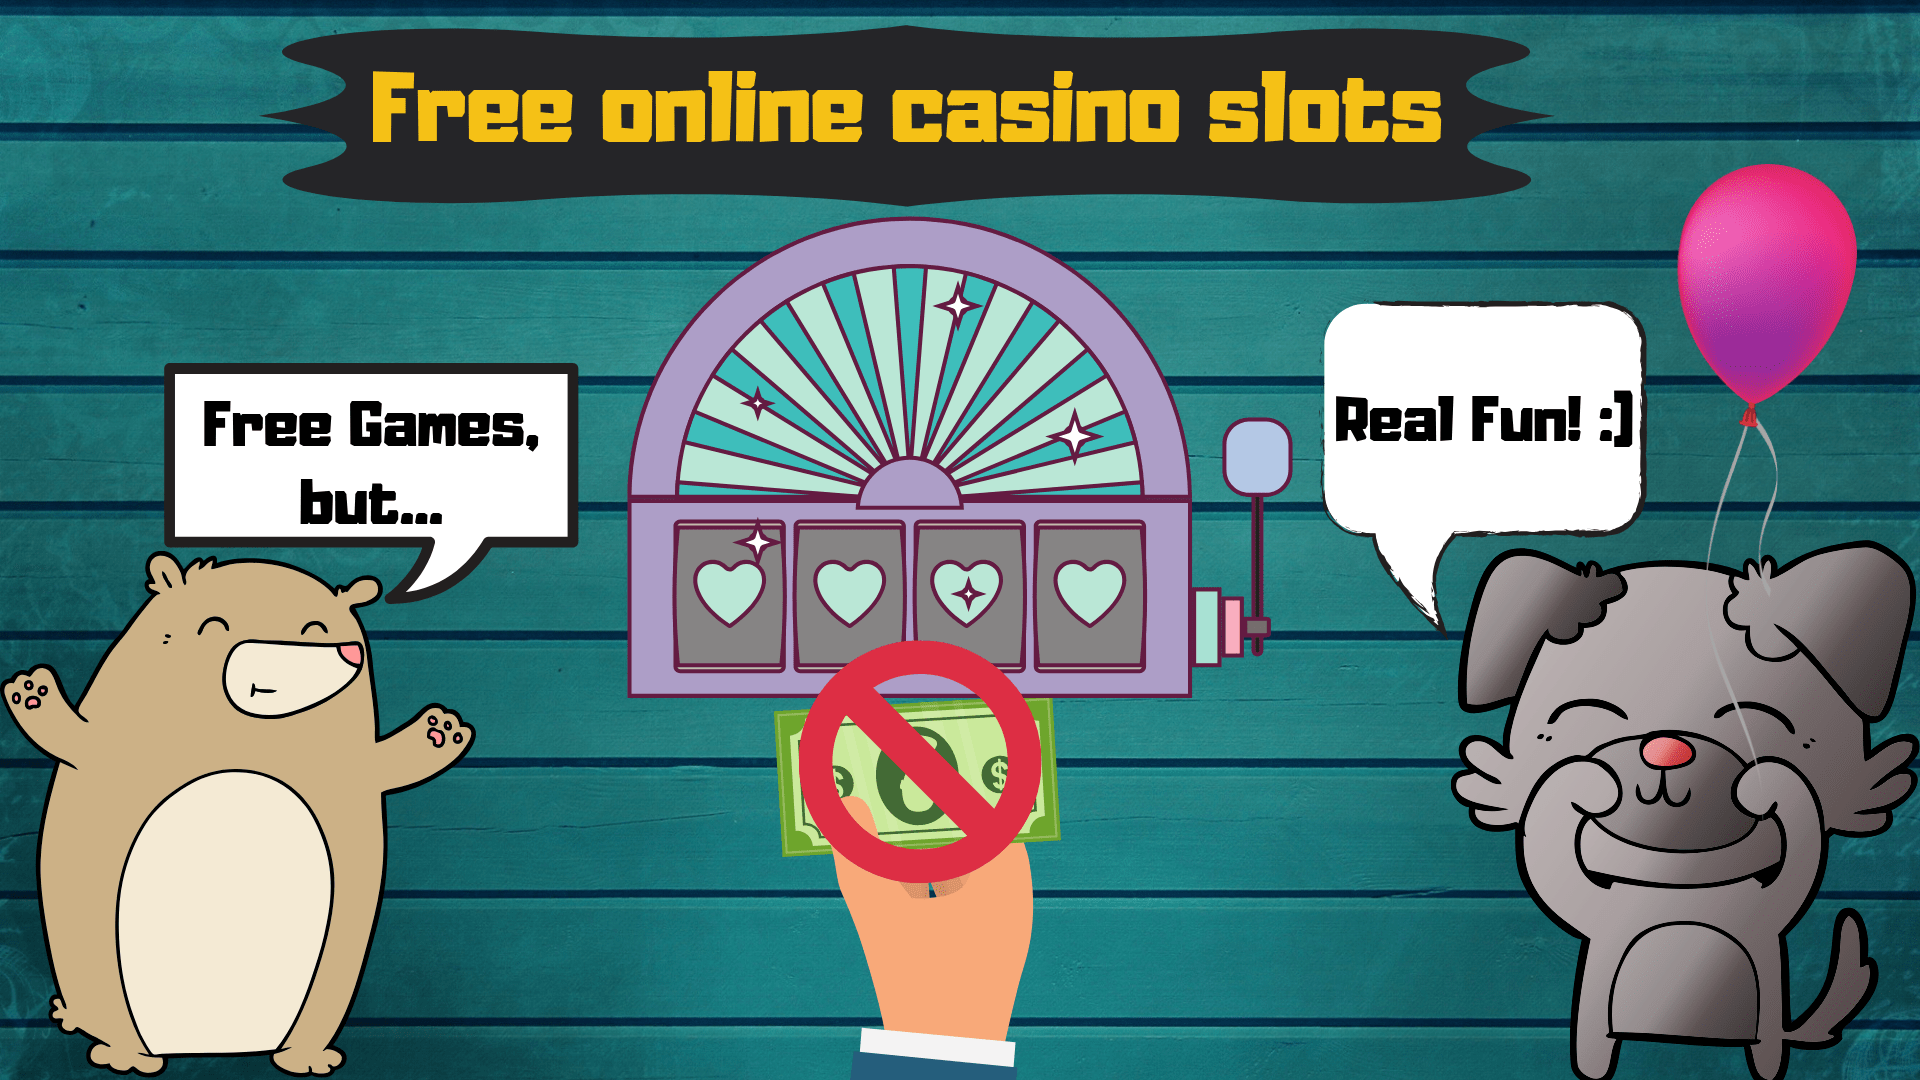 Free Online Casino Slots